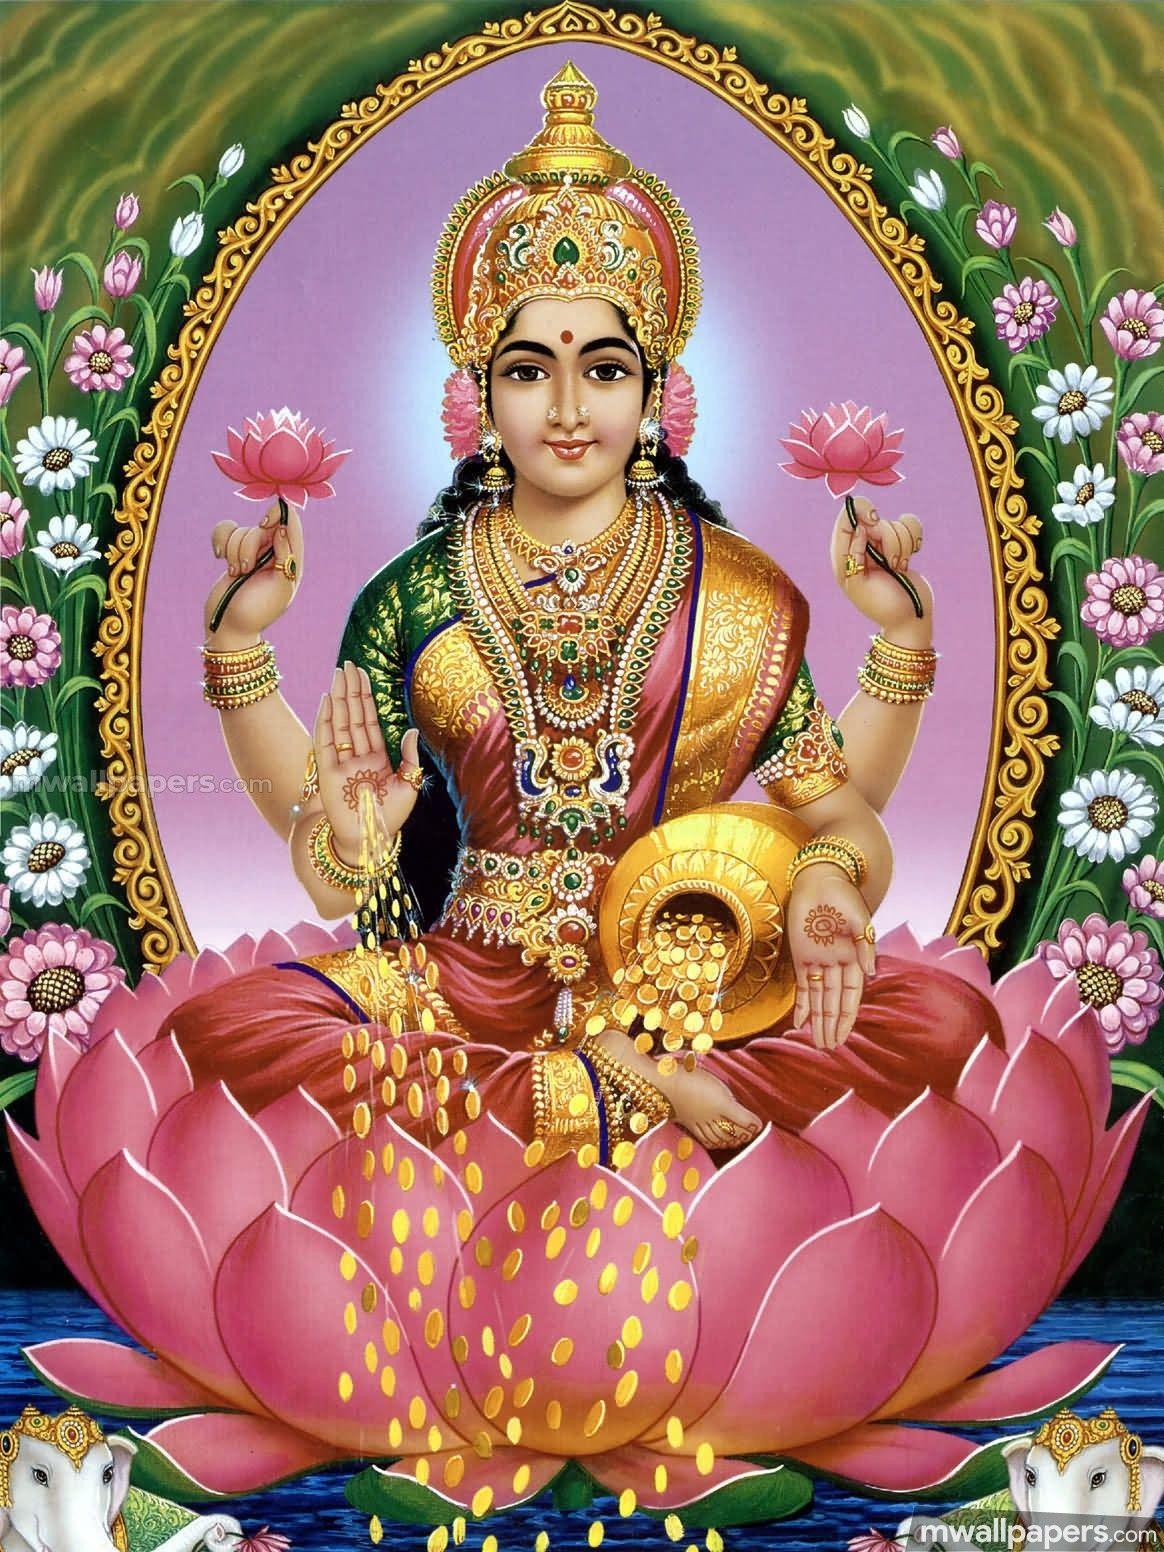 Download Hindu Goddess Lakshmi Wallpaper | Wallpapers.com